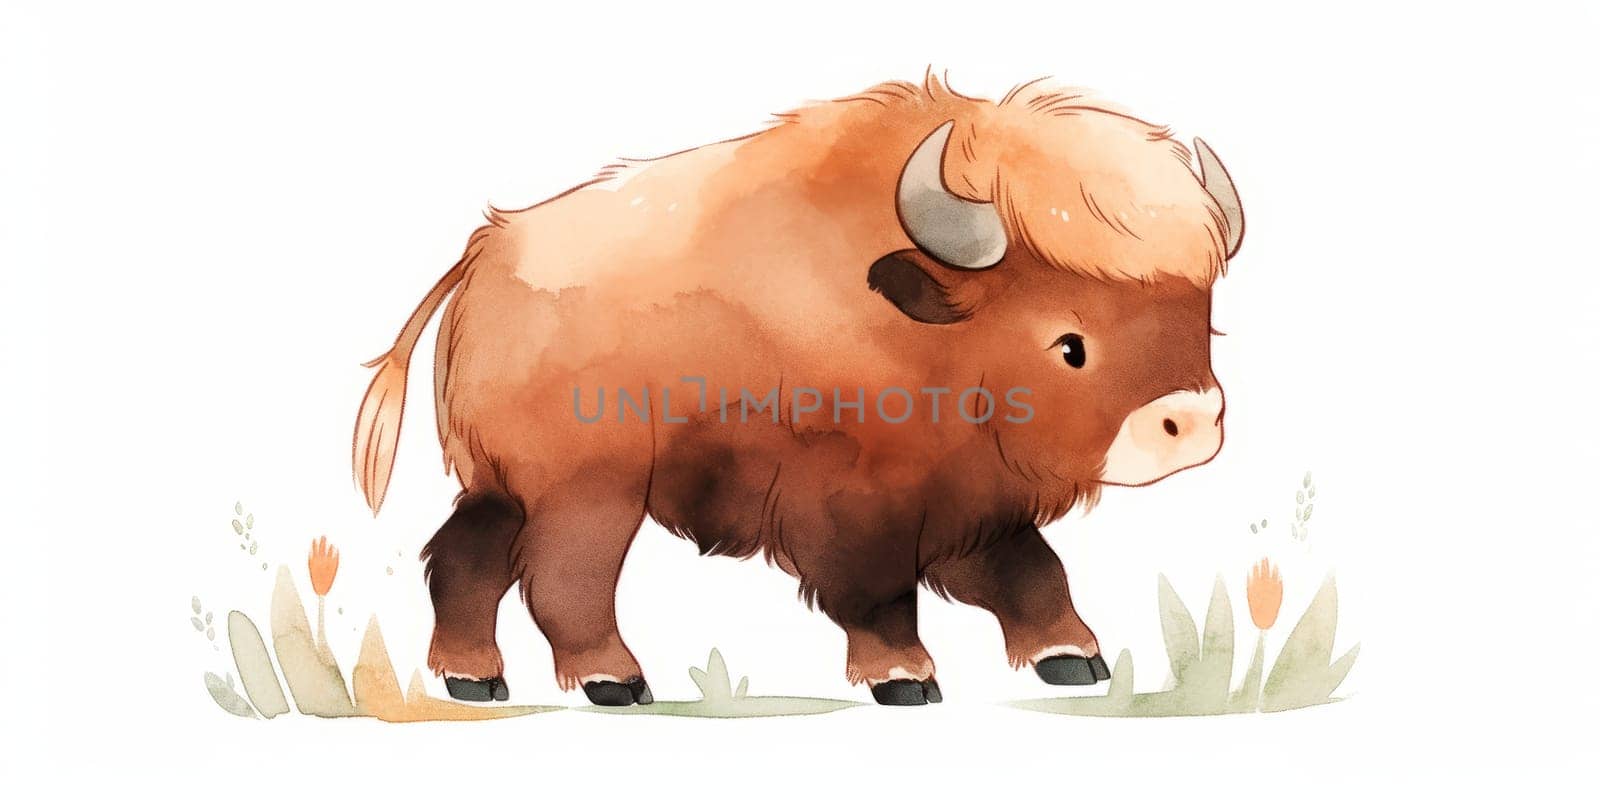 Cute little kawaii buffalo hand drawn watercolor illustration